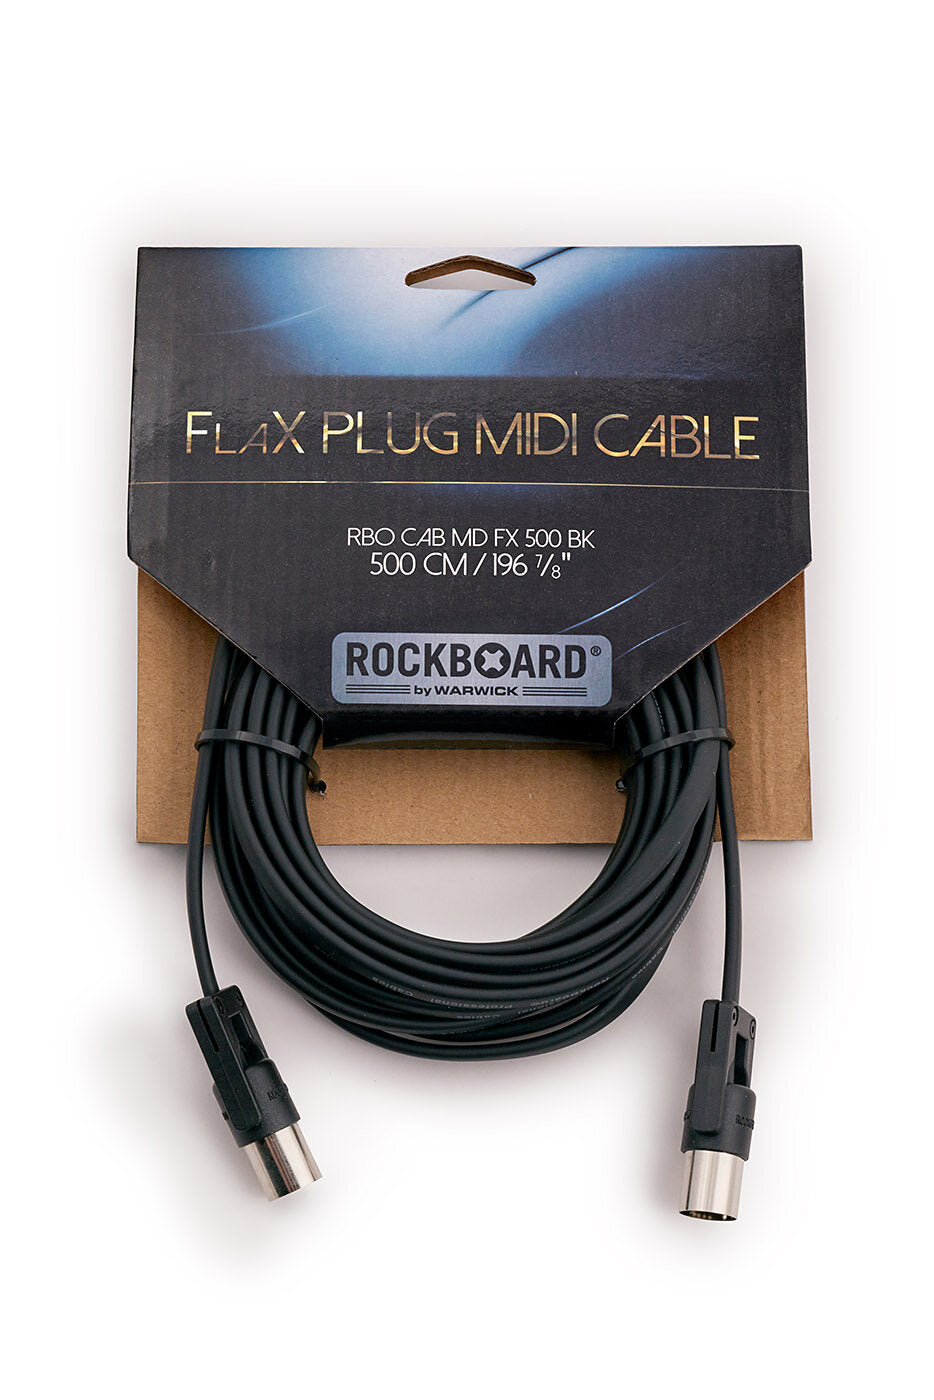 RockBoard FlaX Plug MIDI Cable, 500 cm / 196 27/32